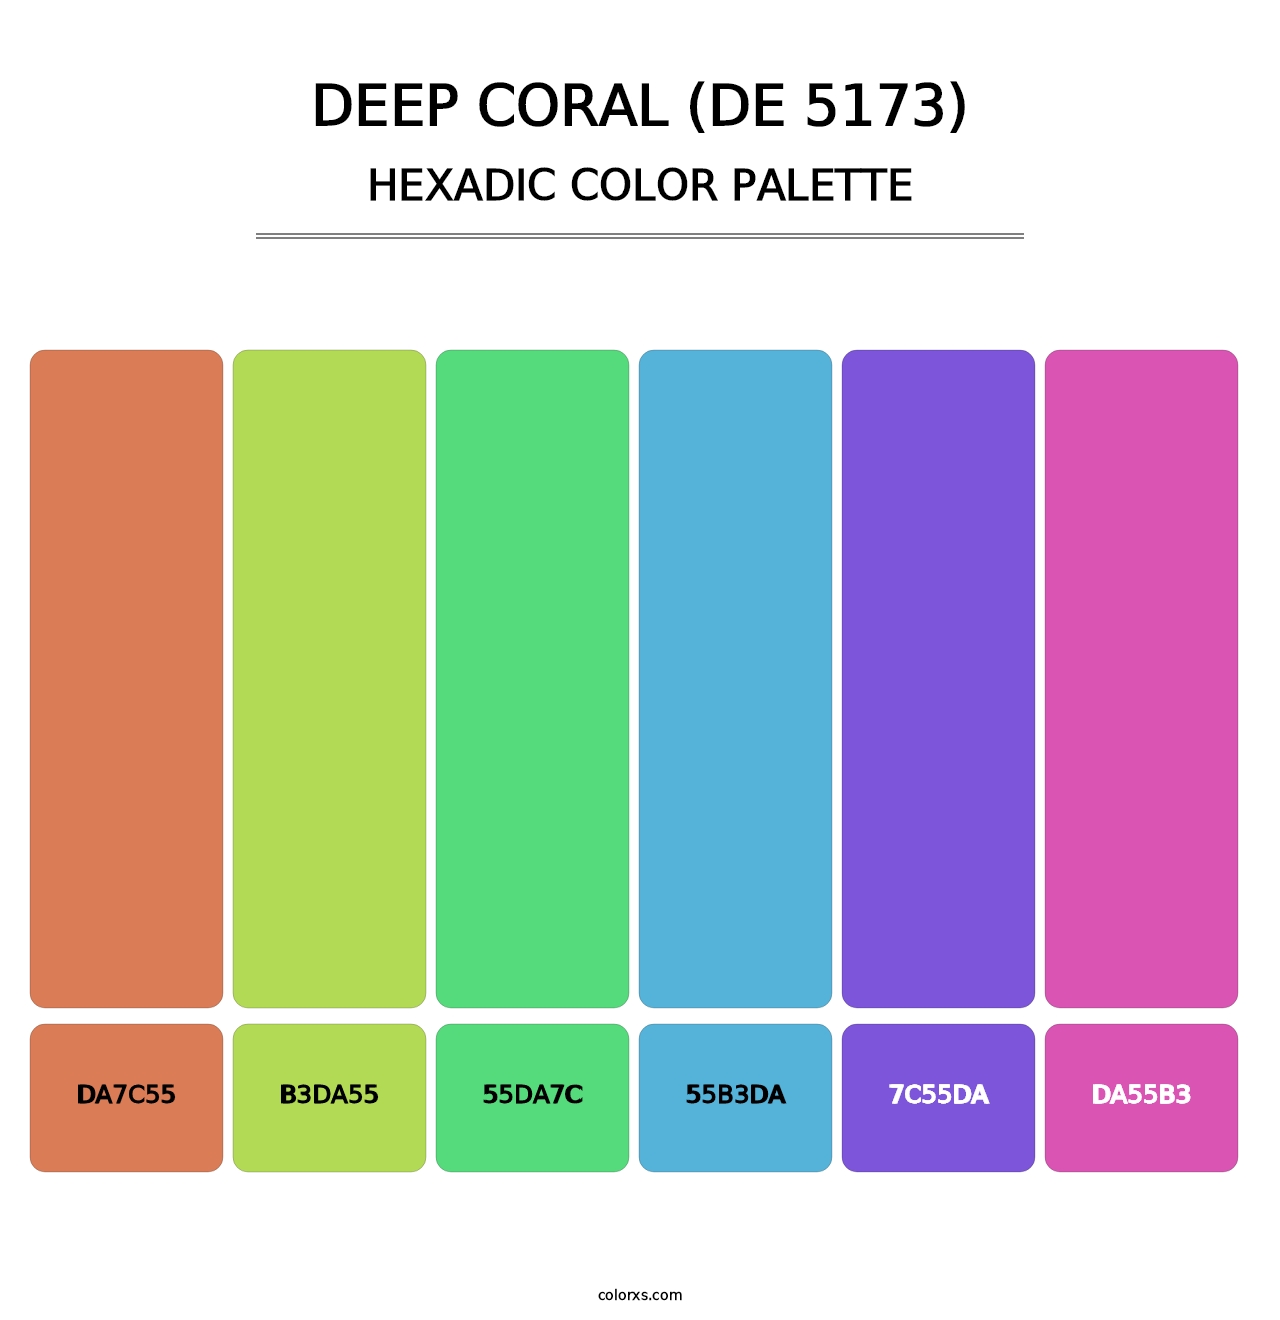 Deep Coral (DE 5173) - Hexadic Color Palette